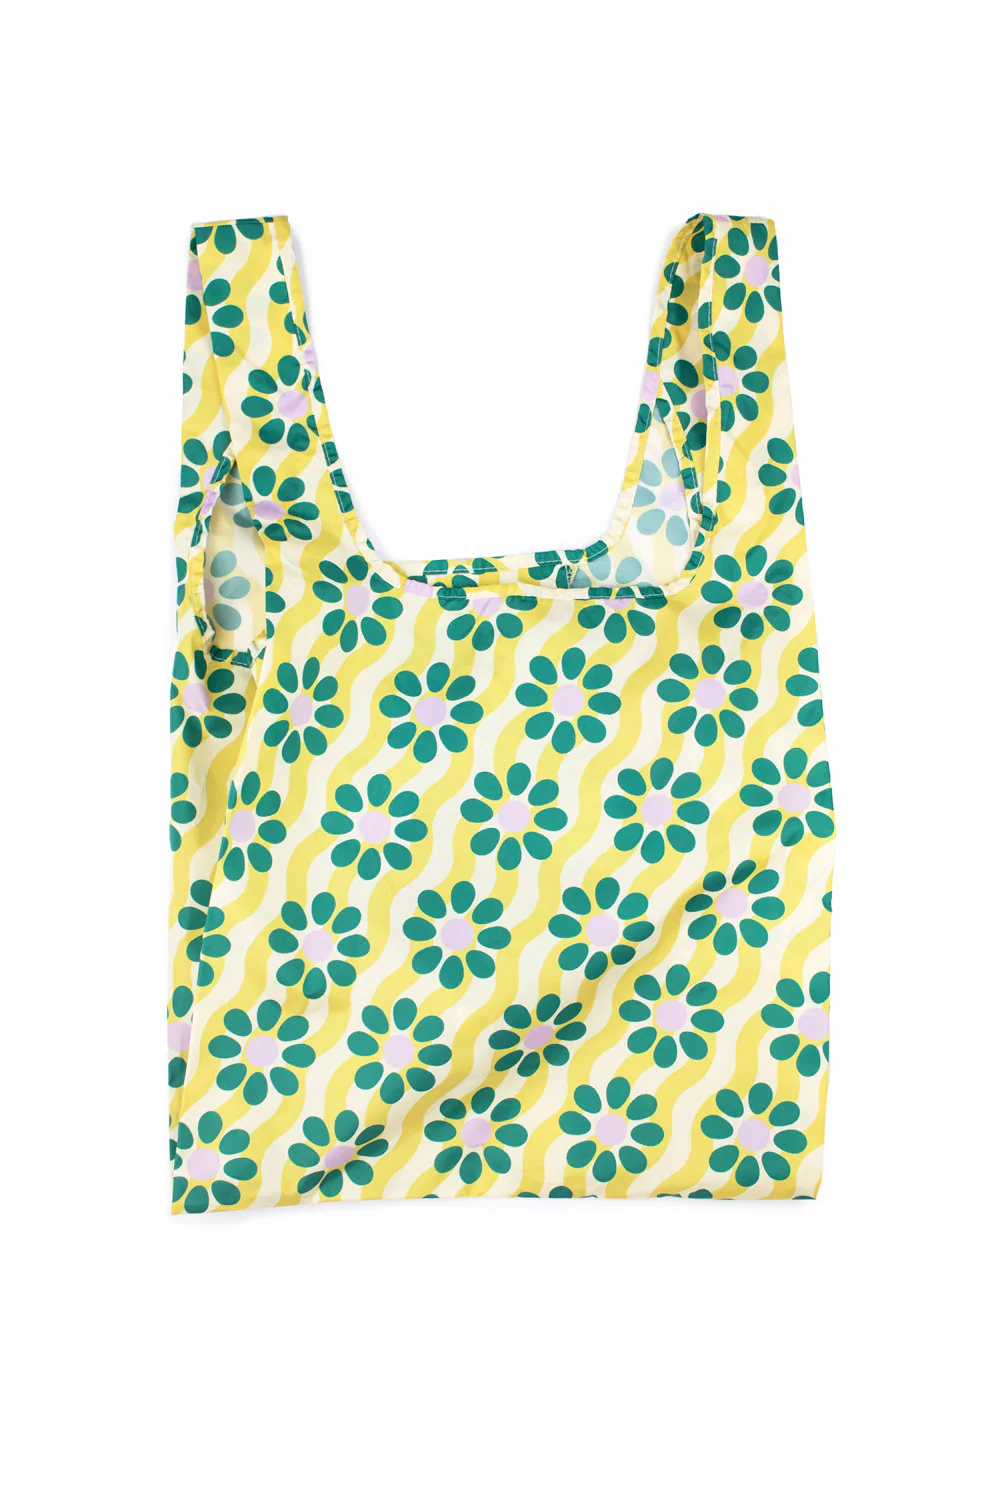 kind-bag-reusable-shopping-bag-wavy-daisy